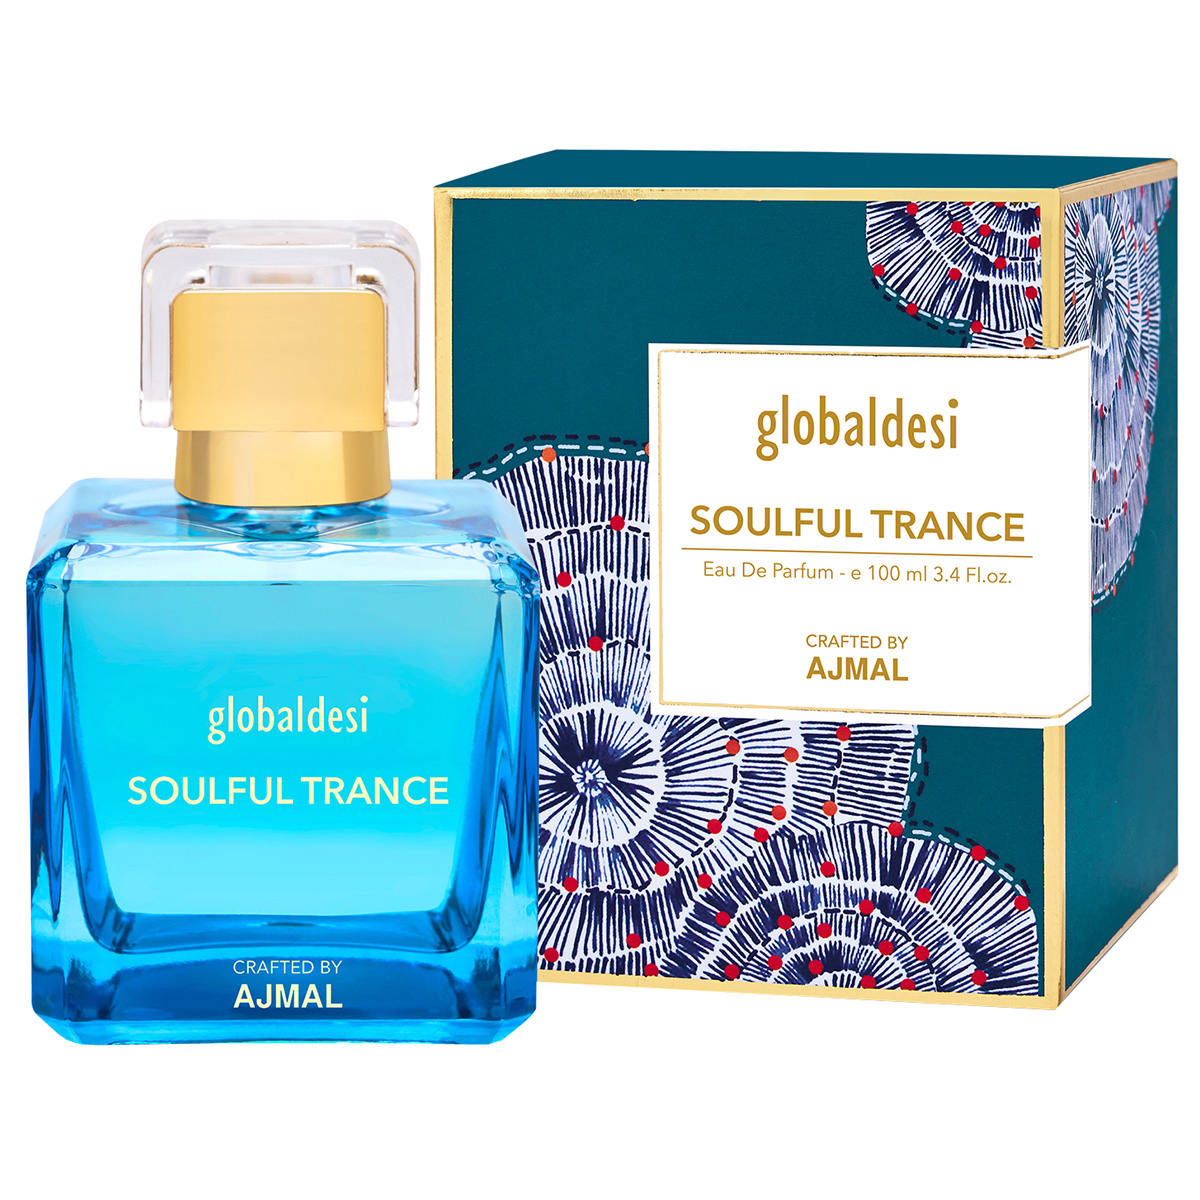 Global Desi Soulful Trance Eau De Perfume For Women Crafted By Ajmal, 100ml